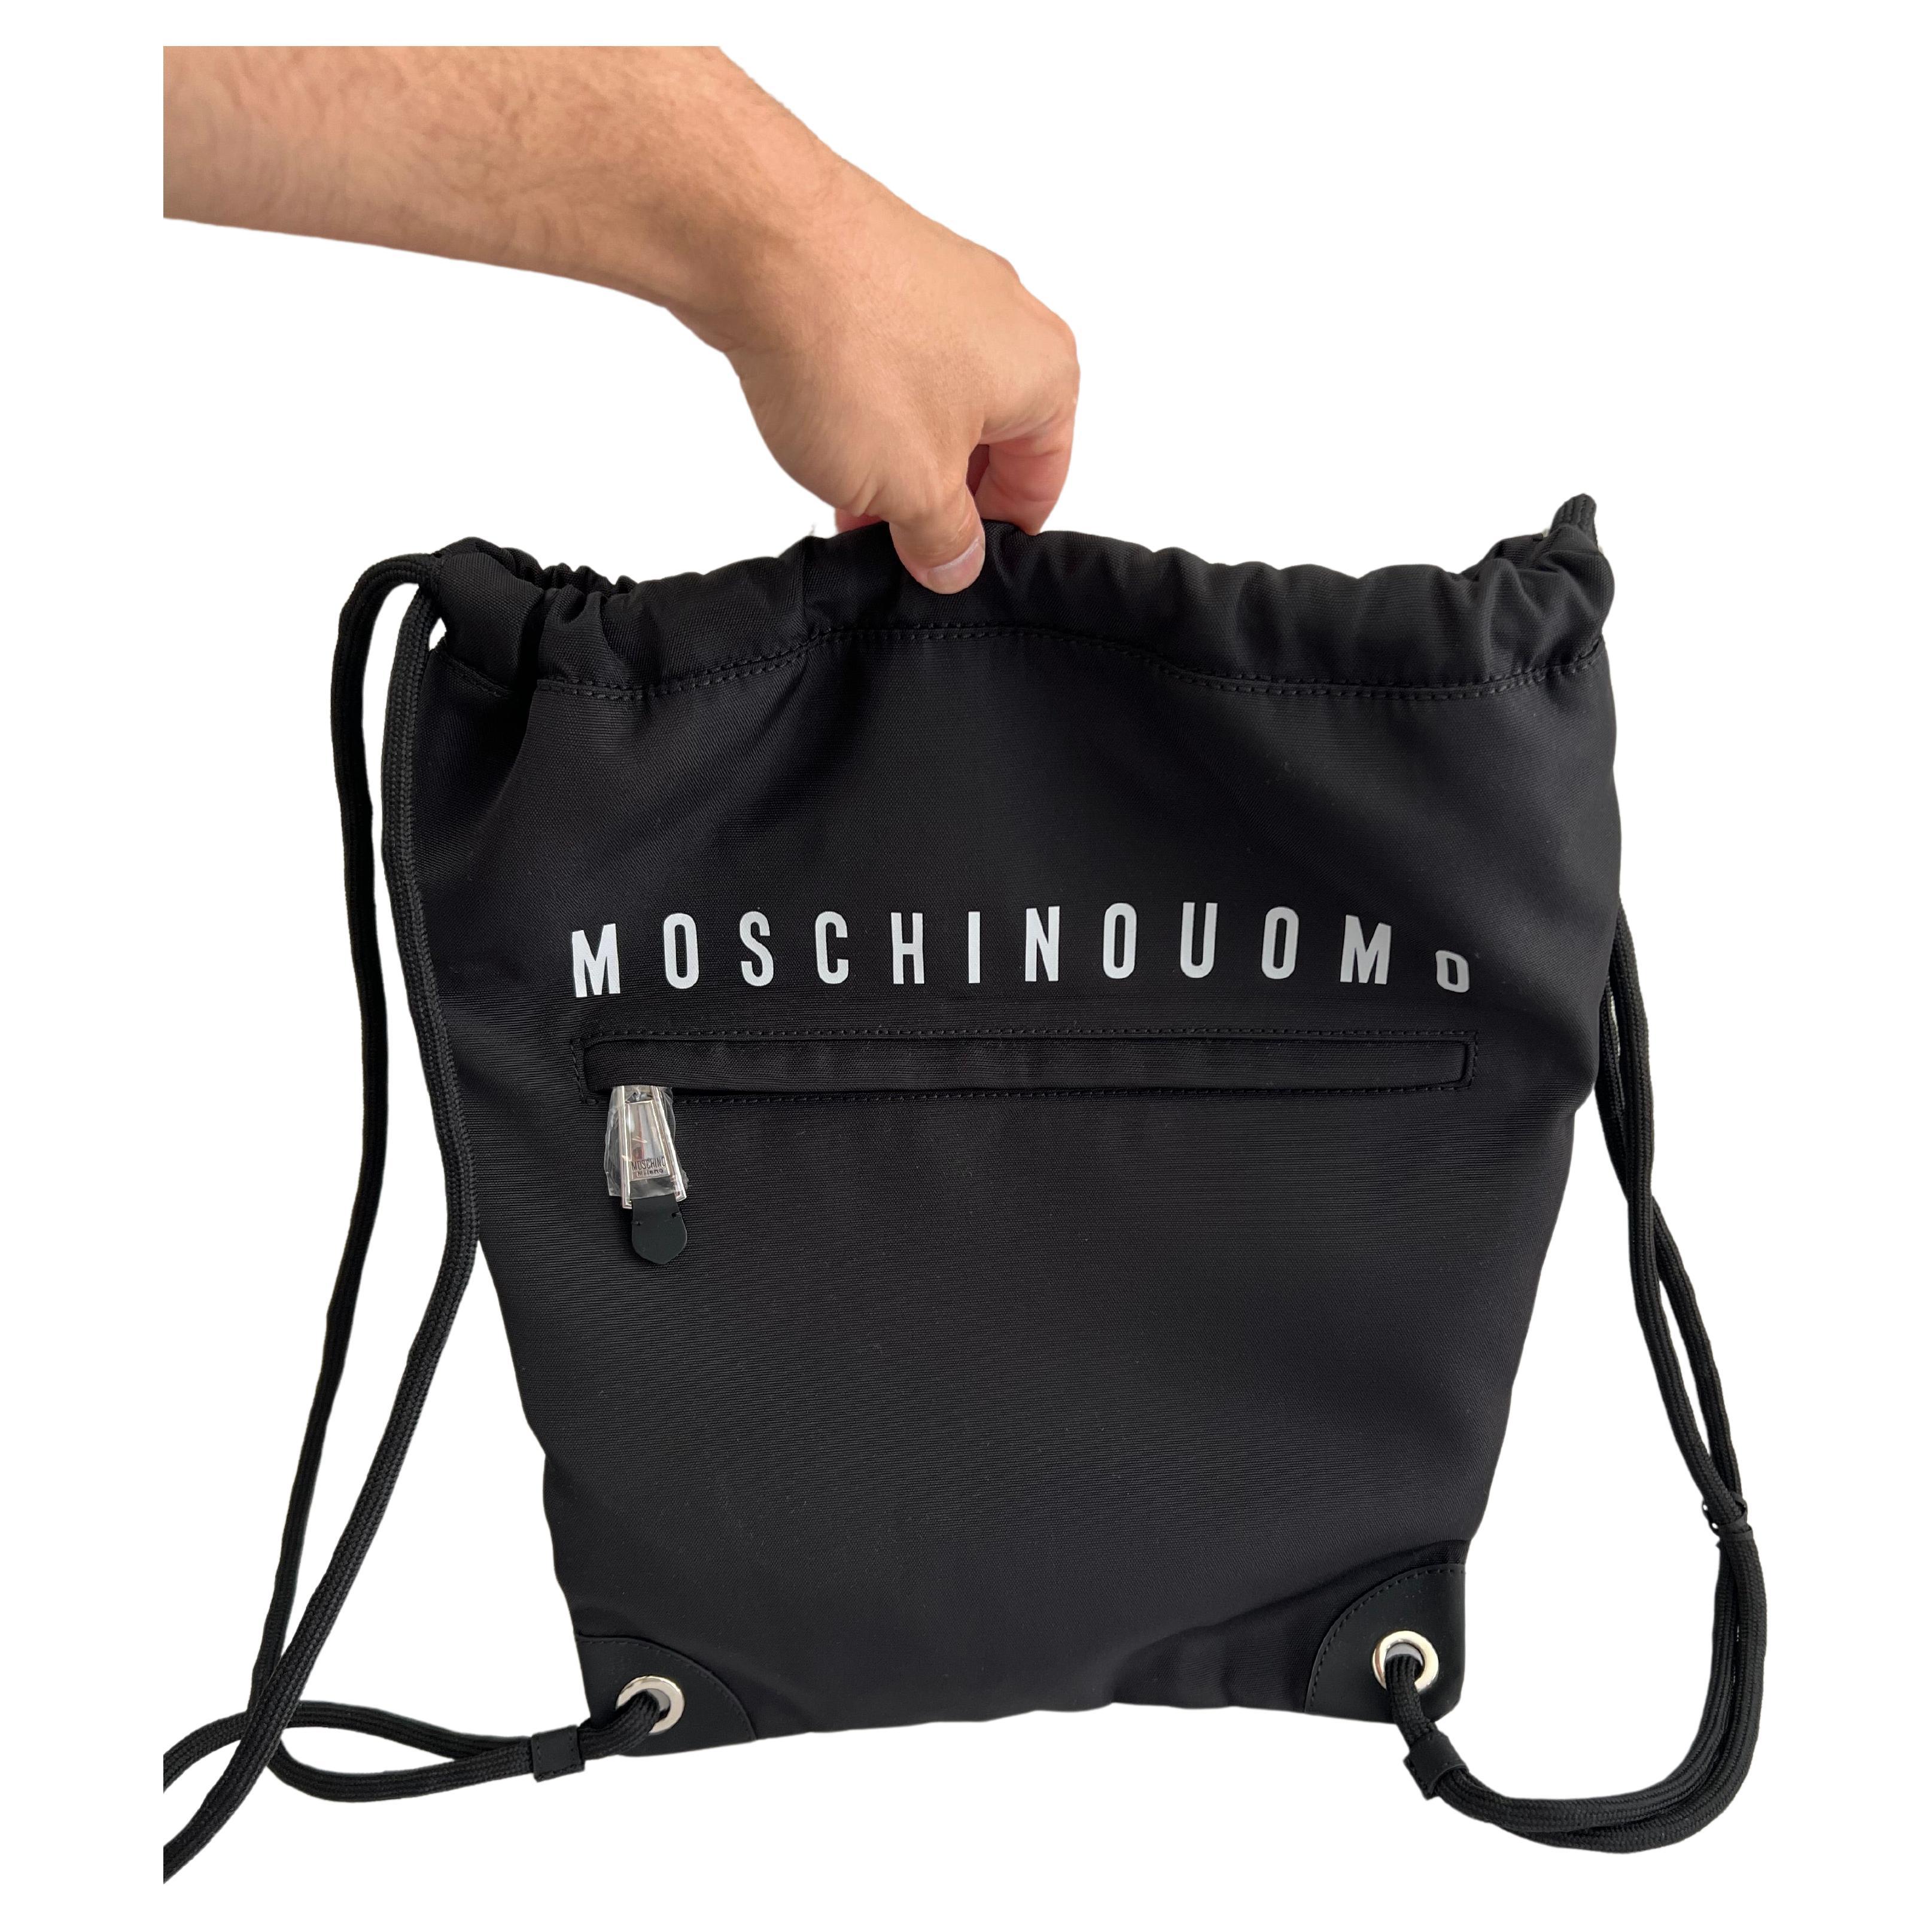 AW20 Moschino Couture Jeremy Scott Black Rectangular Men's Black Sack Backpack